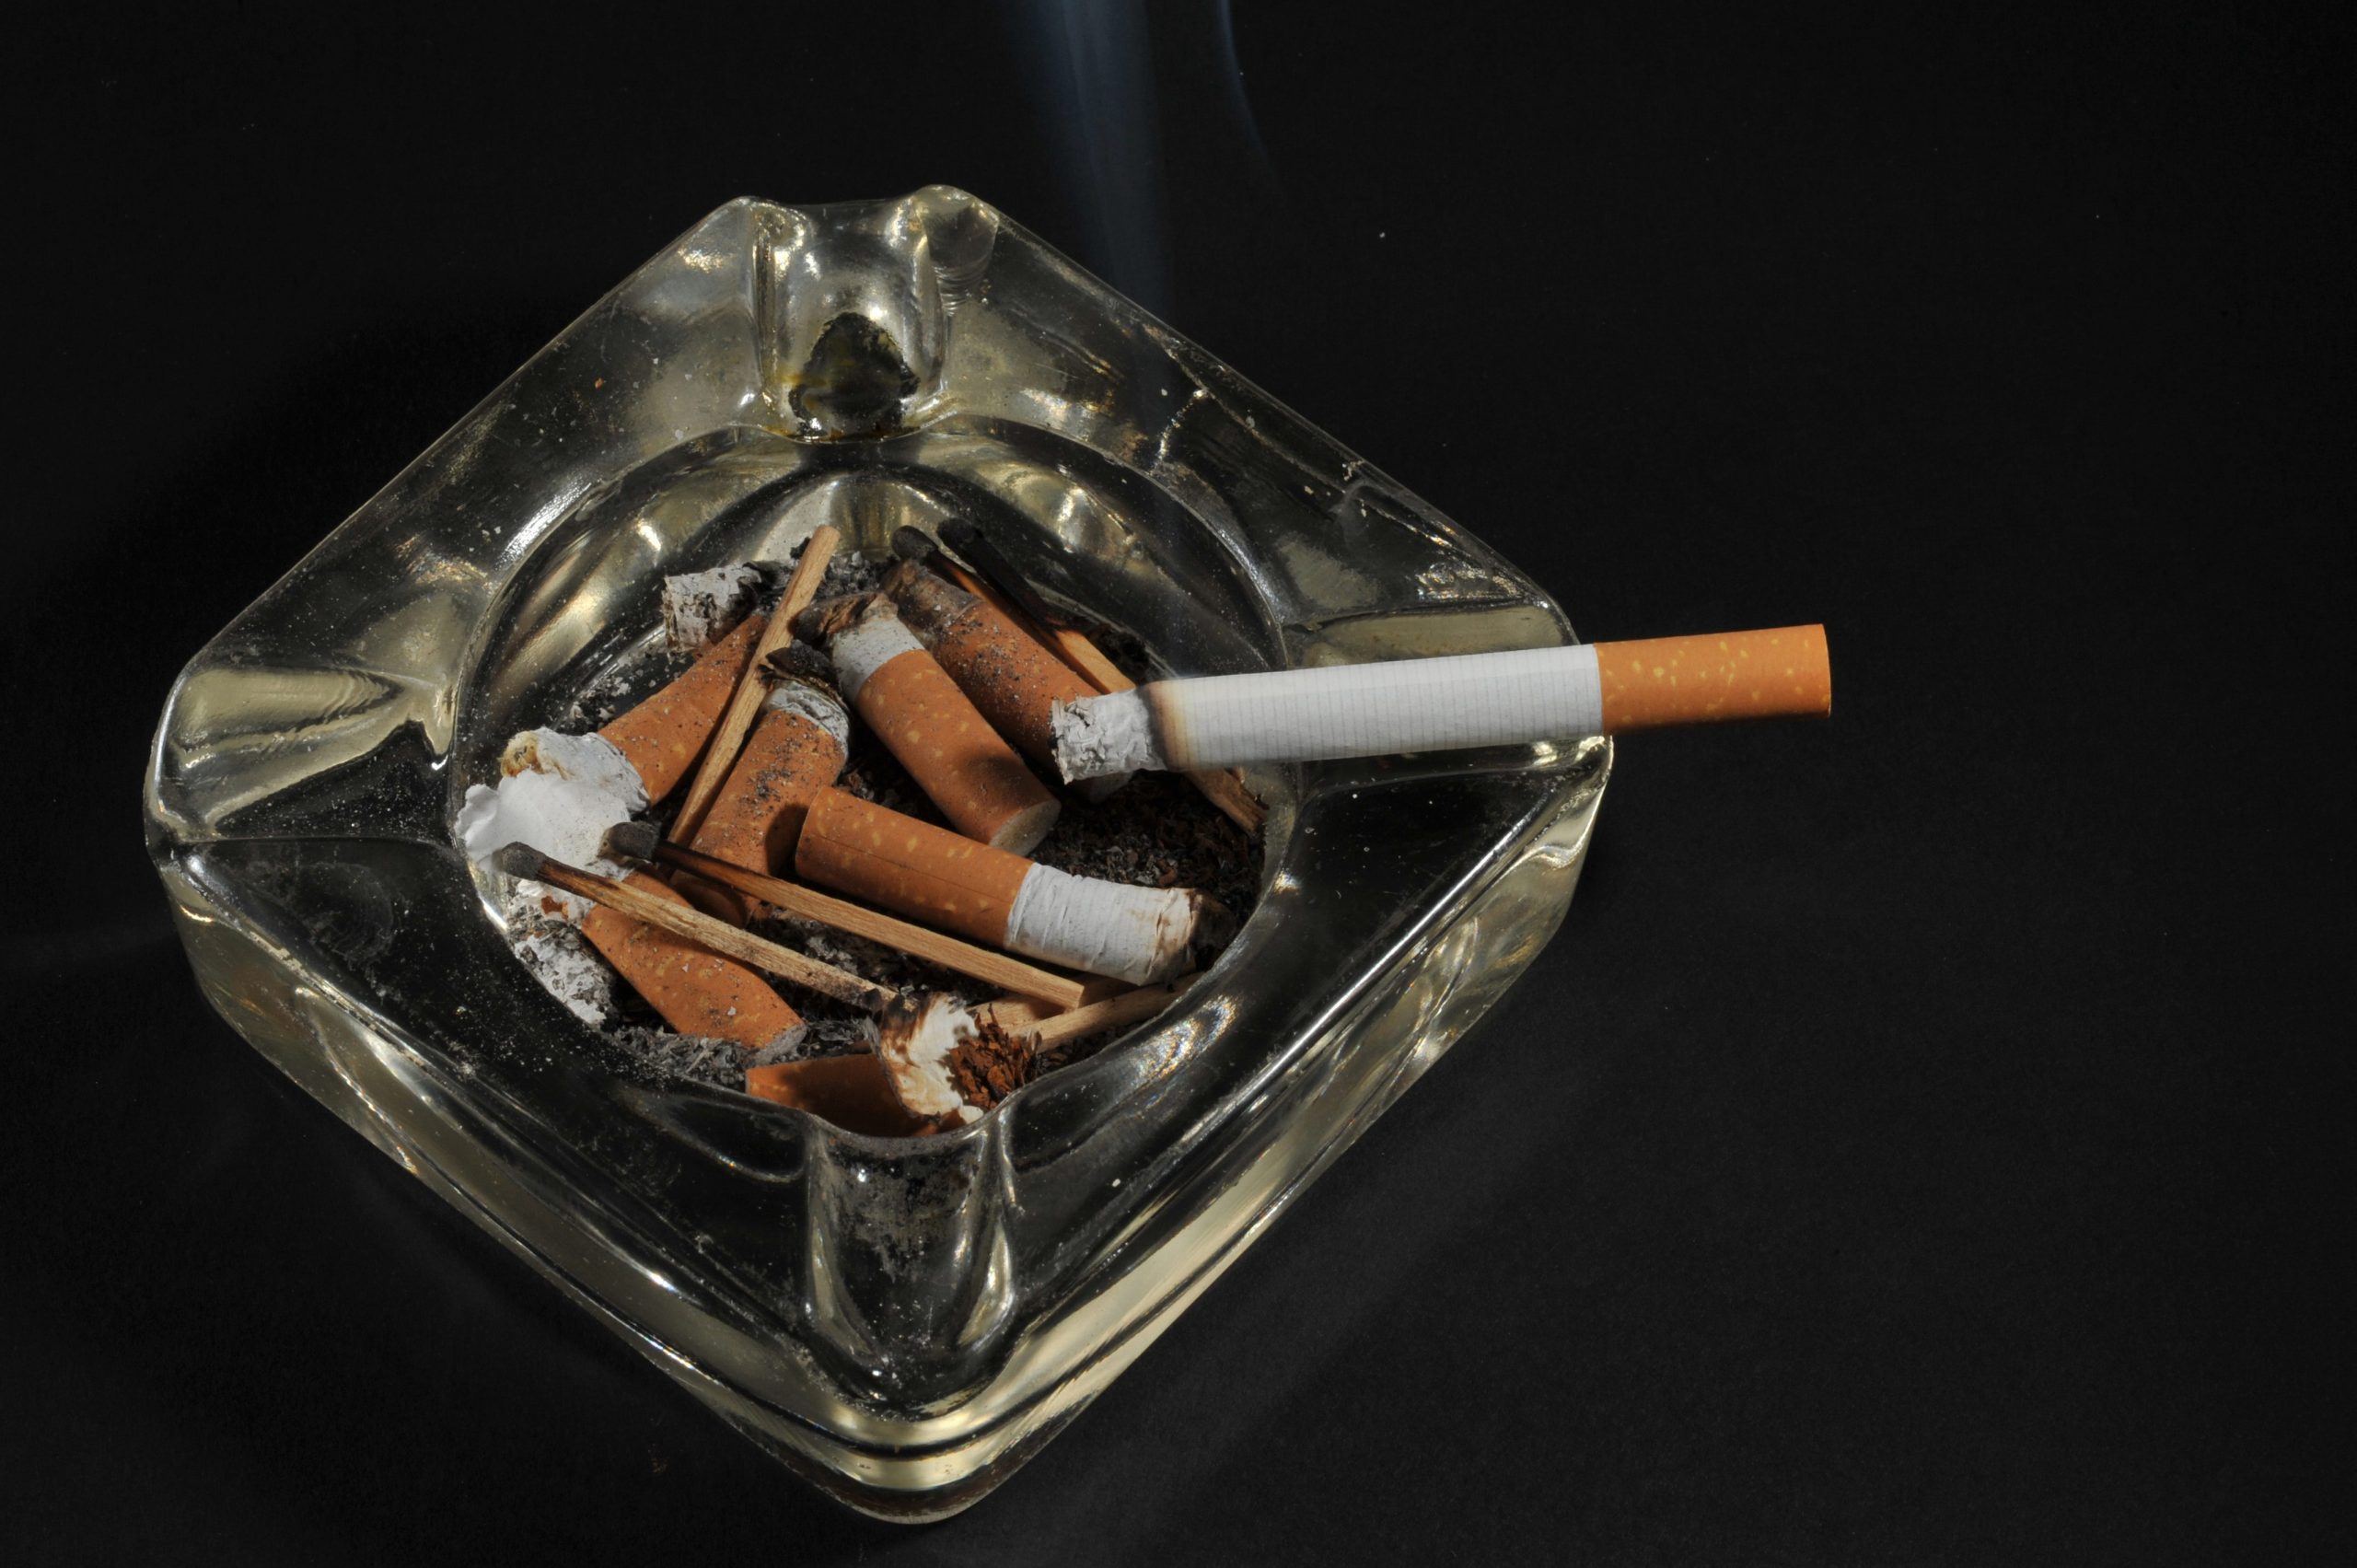 Spain's most 'smokiest' regions revealed on 'World No Tobacco Day'